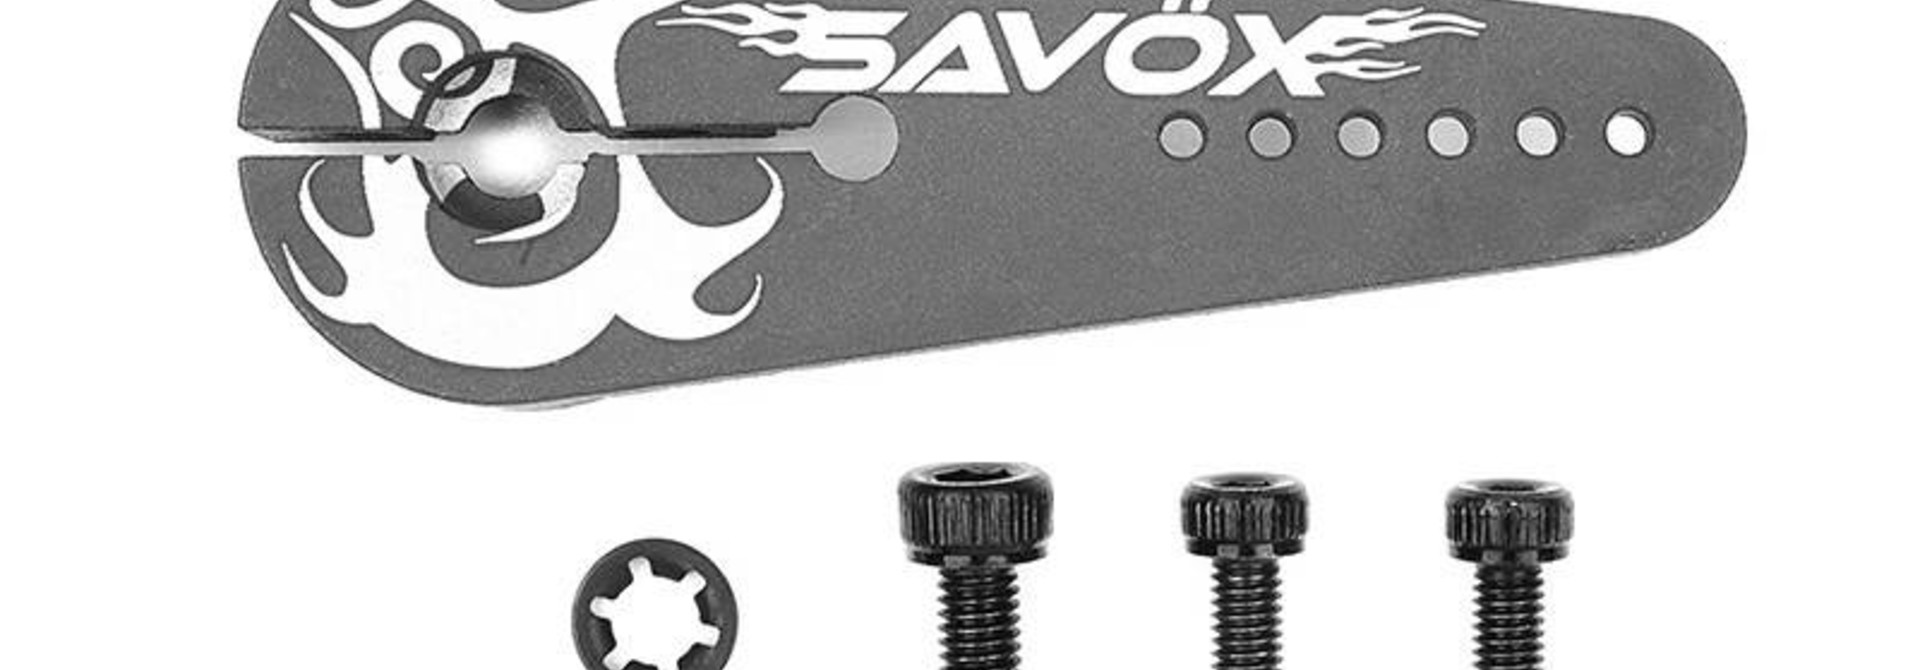 Savox - Servohevel set - 82M - Aluminium - voor 25T Spline metaal tandwiel servos